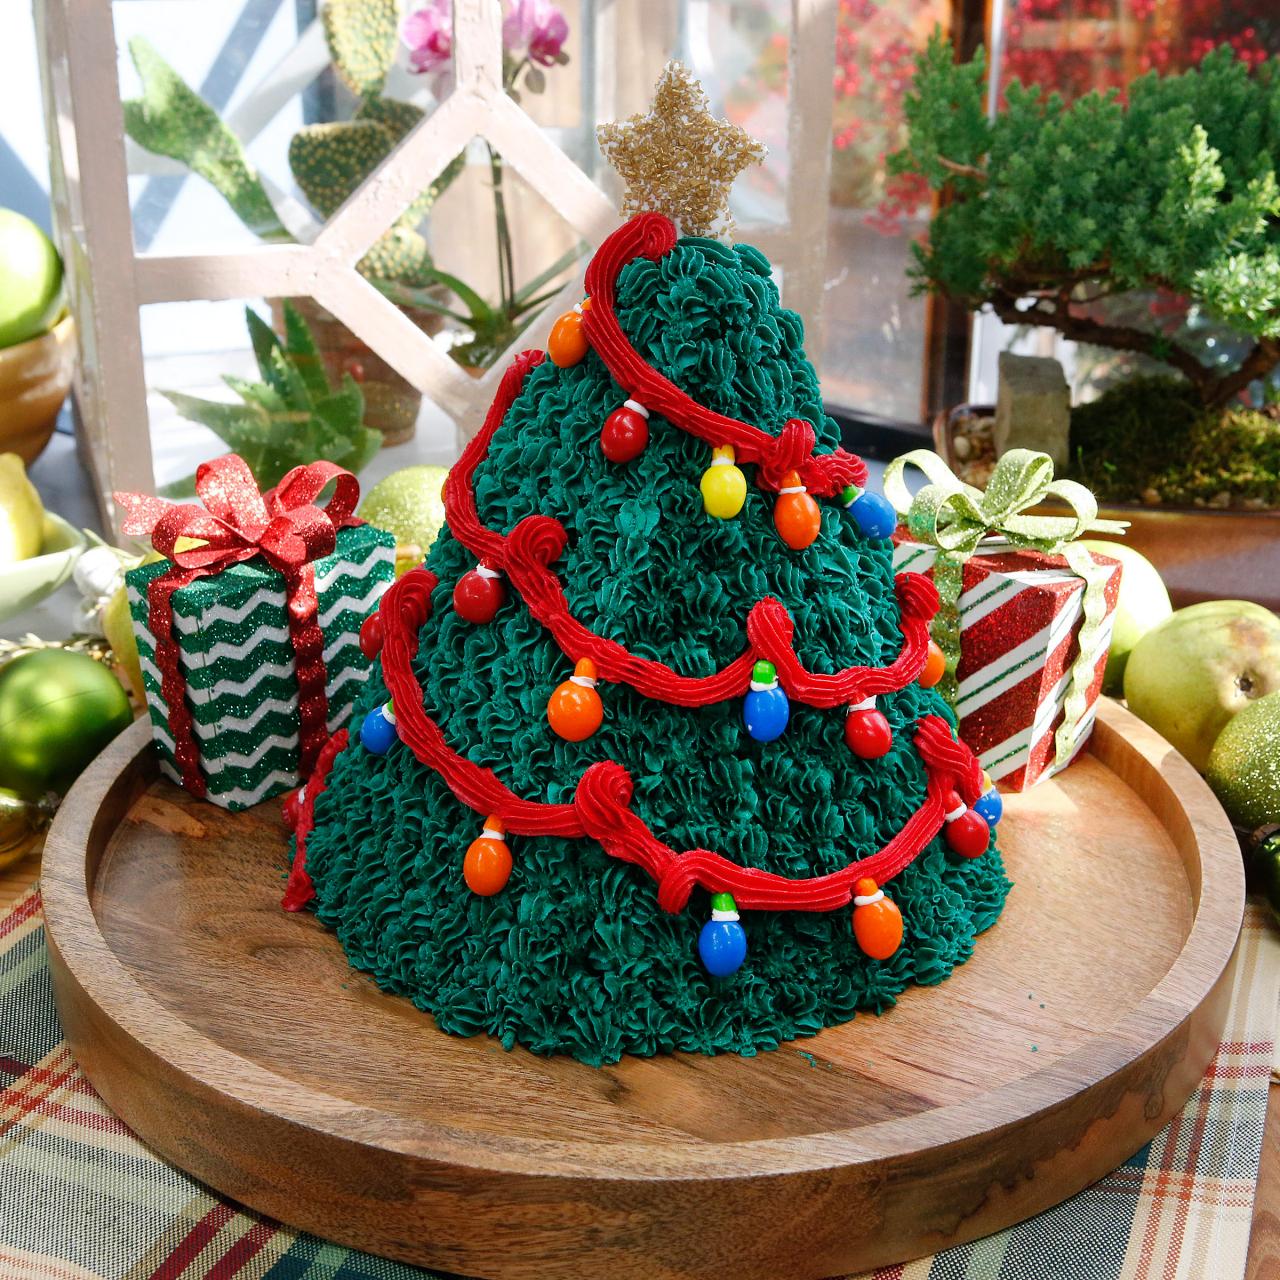 https://food.fnr.sndimg.com/content/dam/images/food/fullset/2016/11/15/1/KC1110_Christmas-Tree-Surprise-Cake_s4x3.jpg.rend.hgtvcom.1280.1280.suffix/1479344483781.jpeg